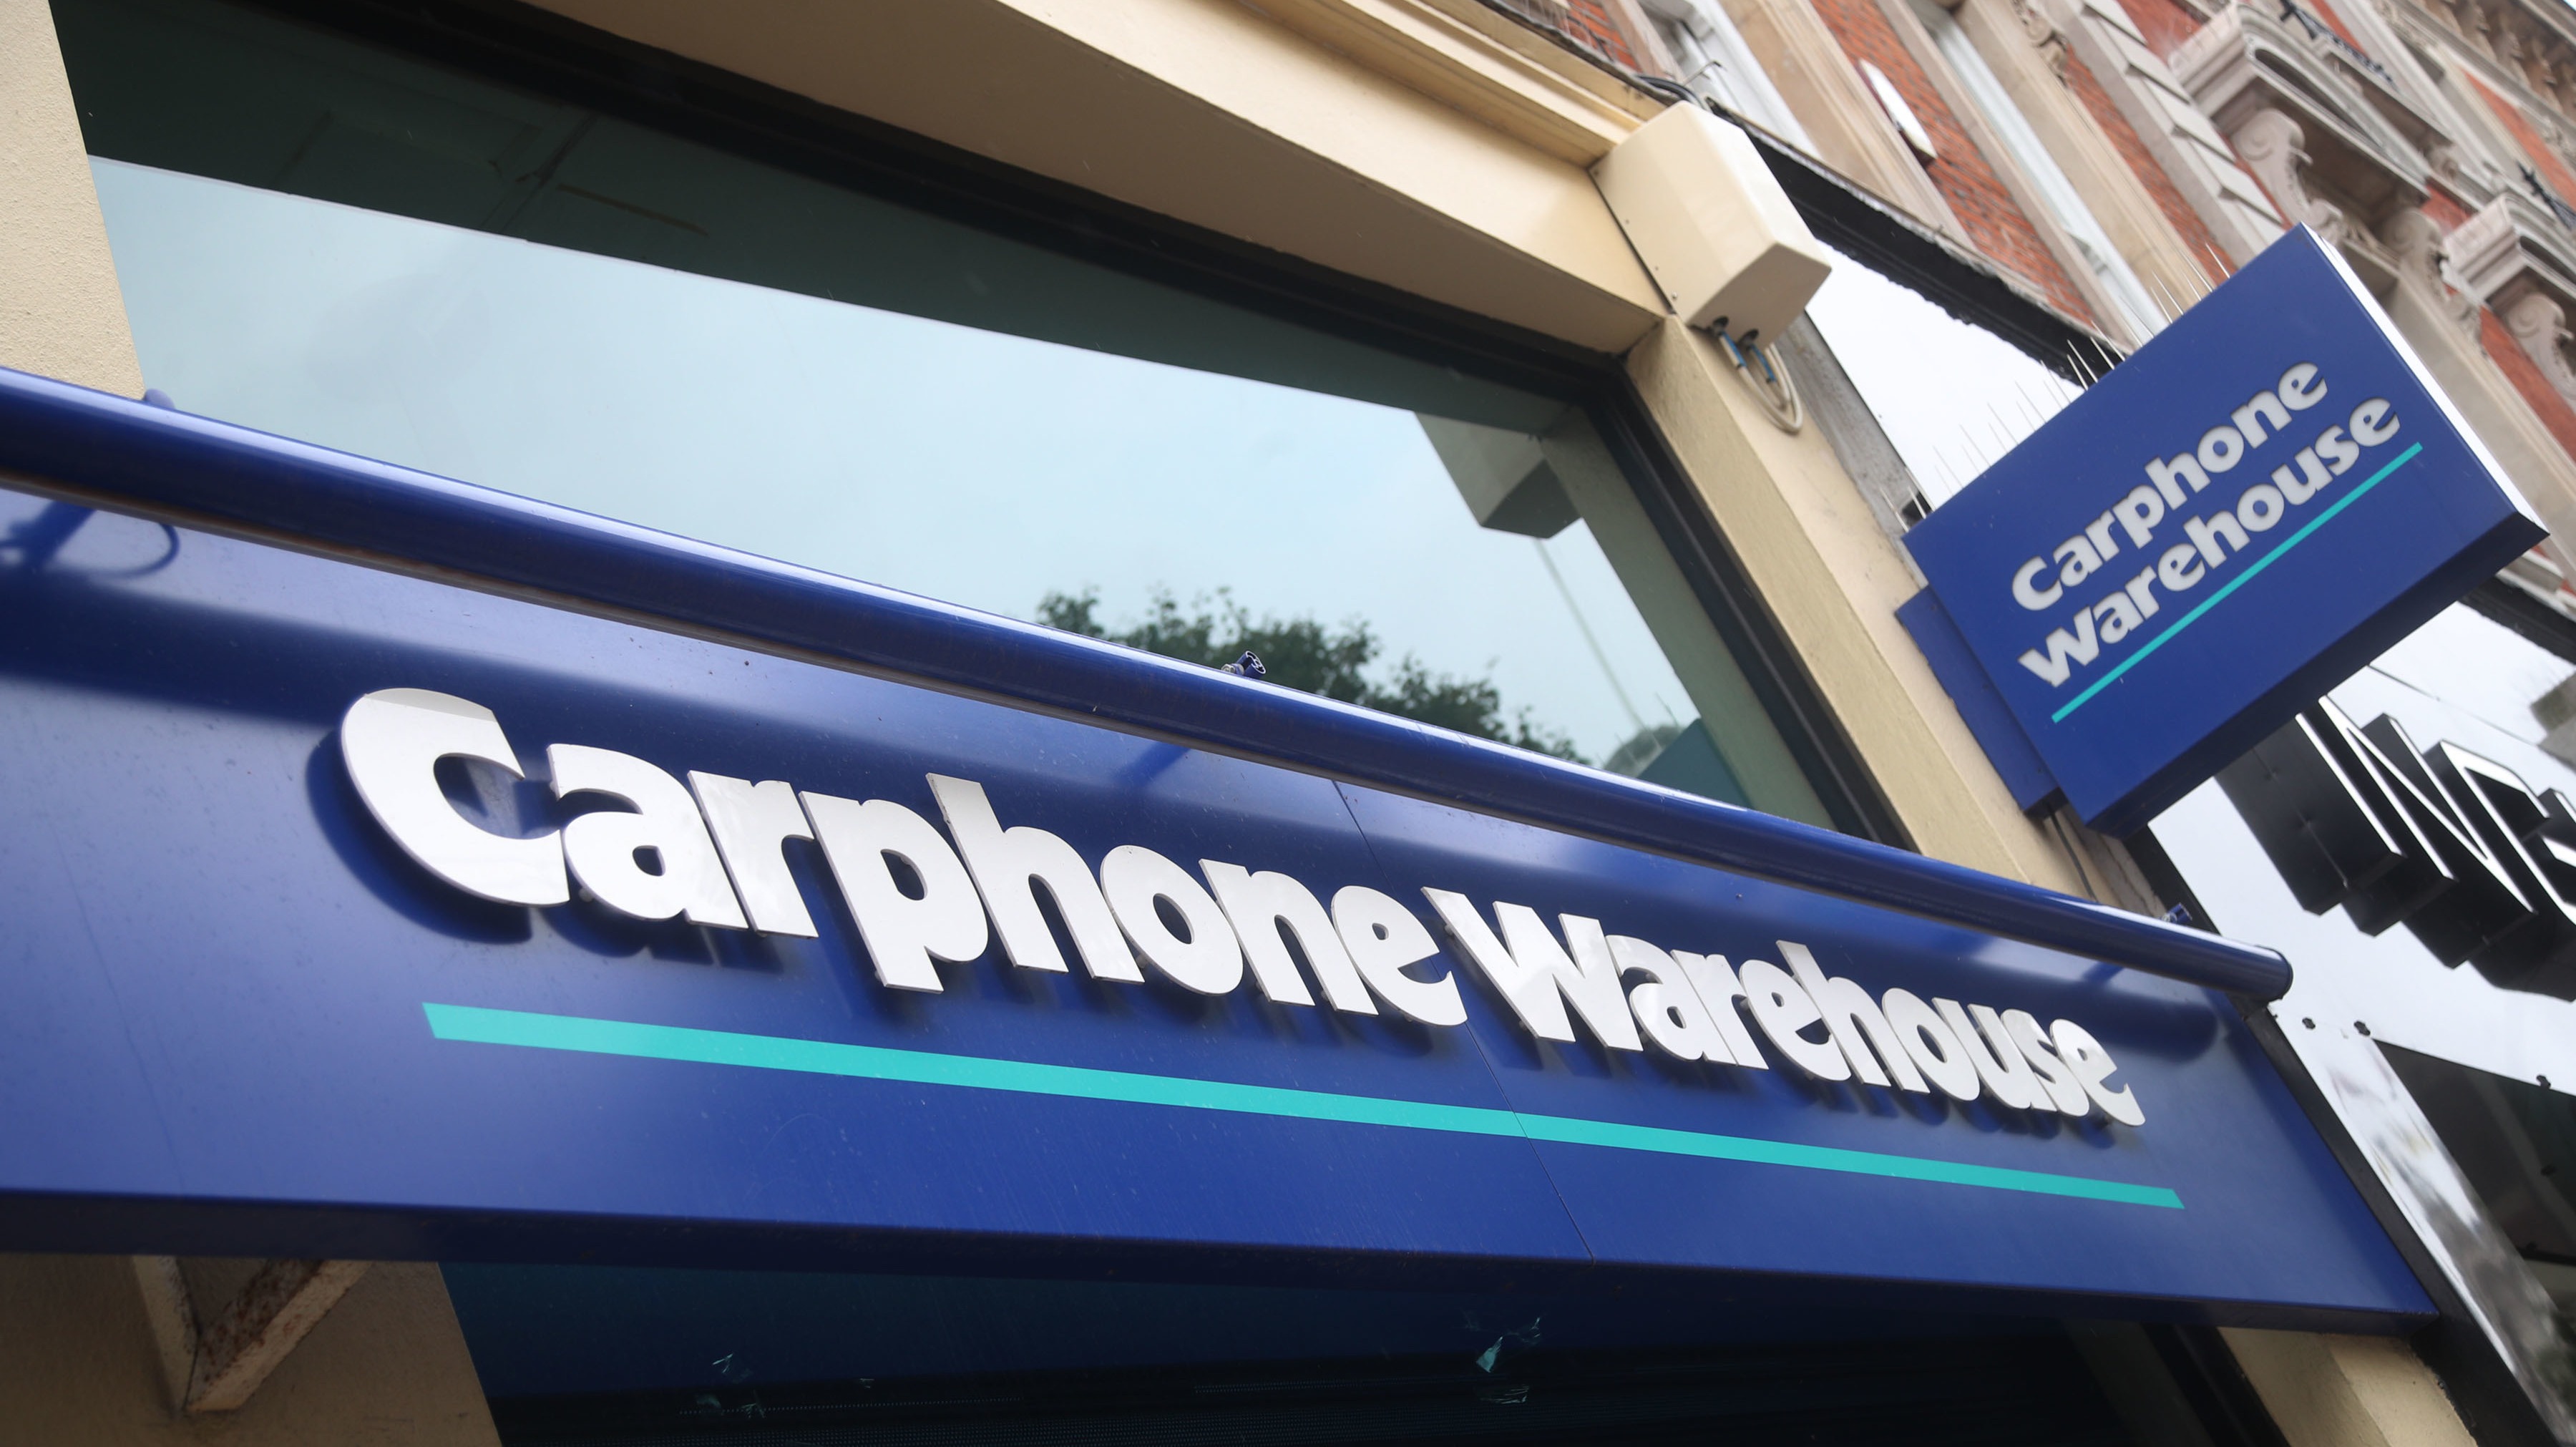 The carphone warehouse job vacancies